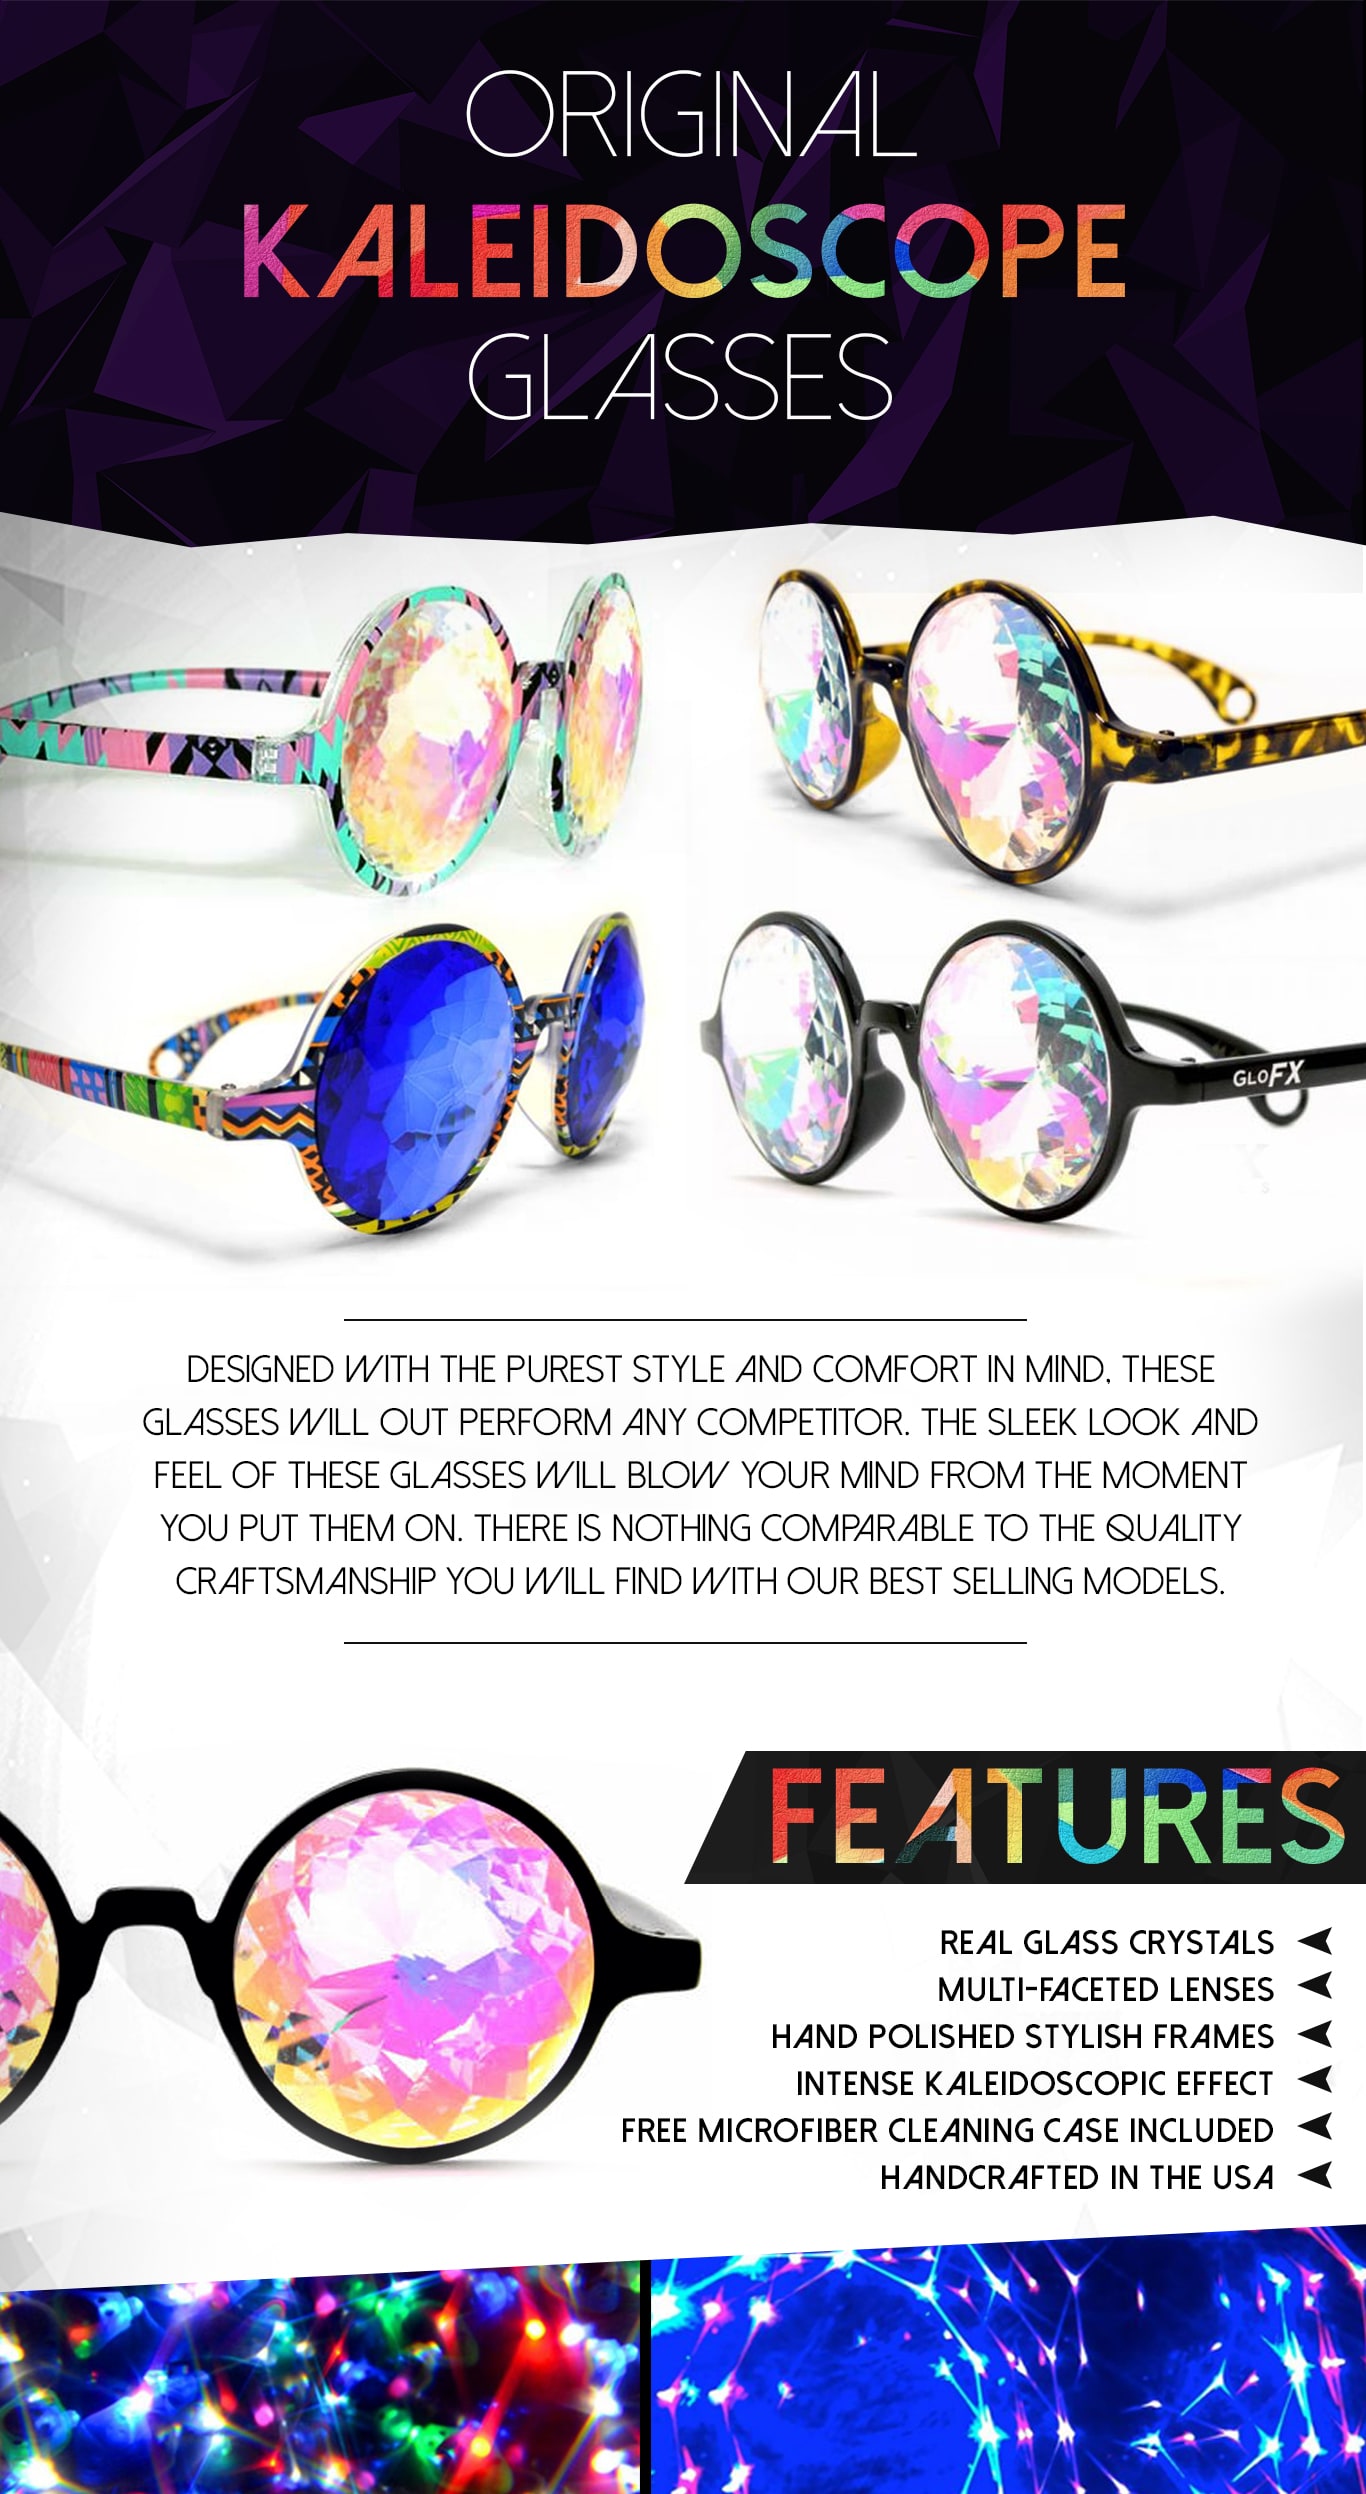 Original Kaleidoscope Glasses by GloFX